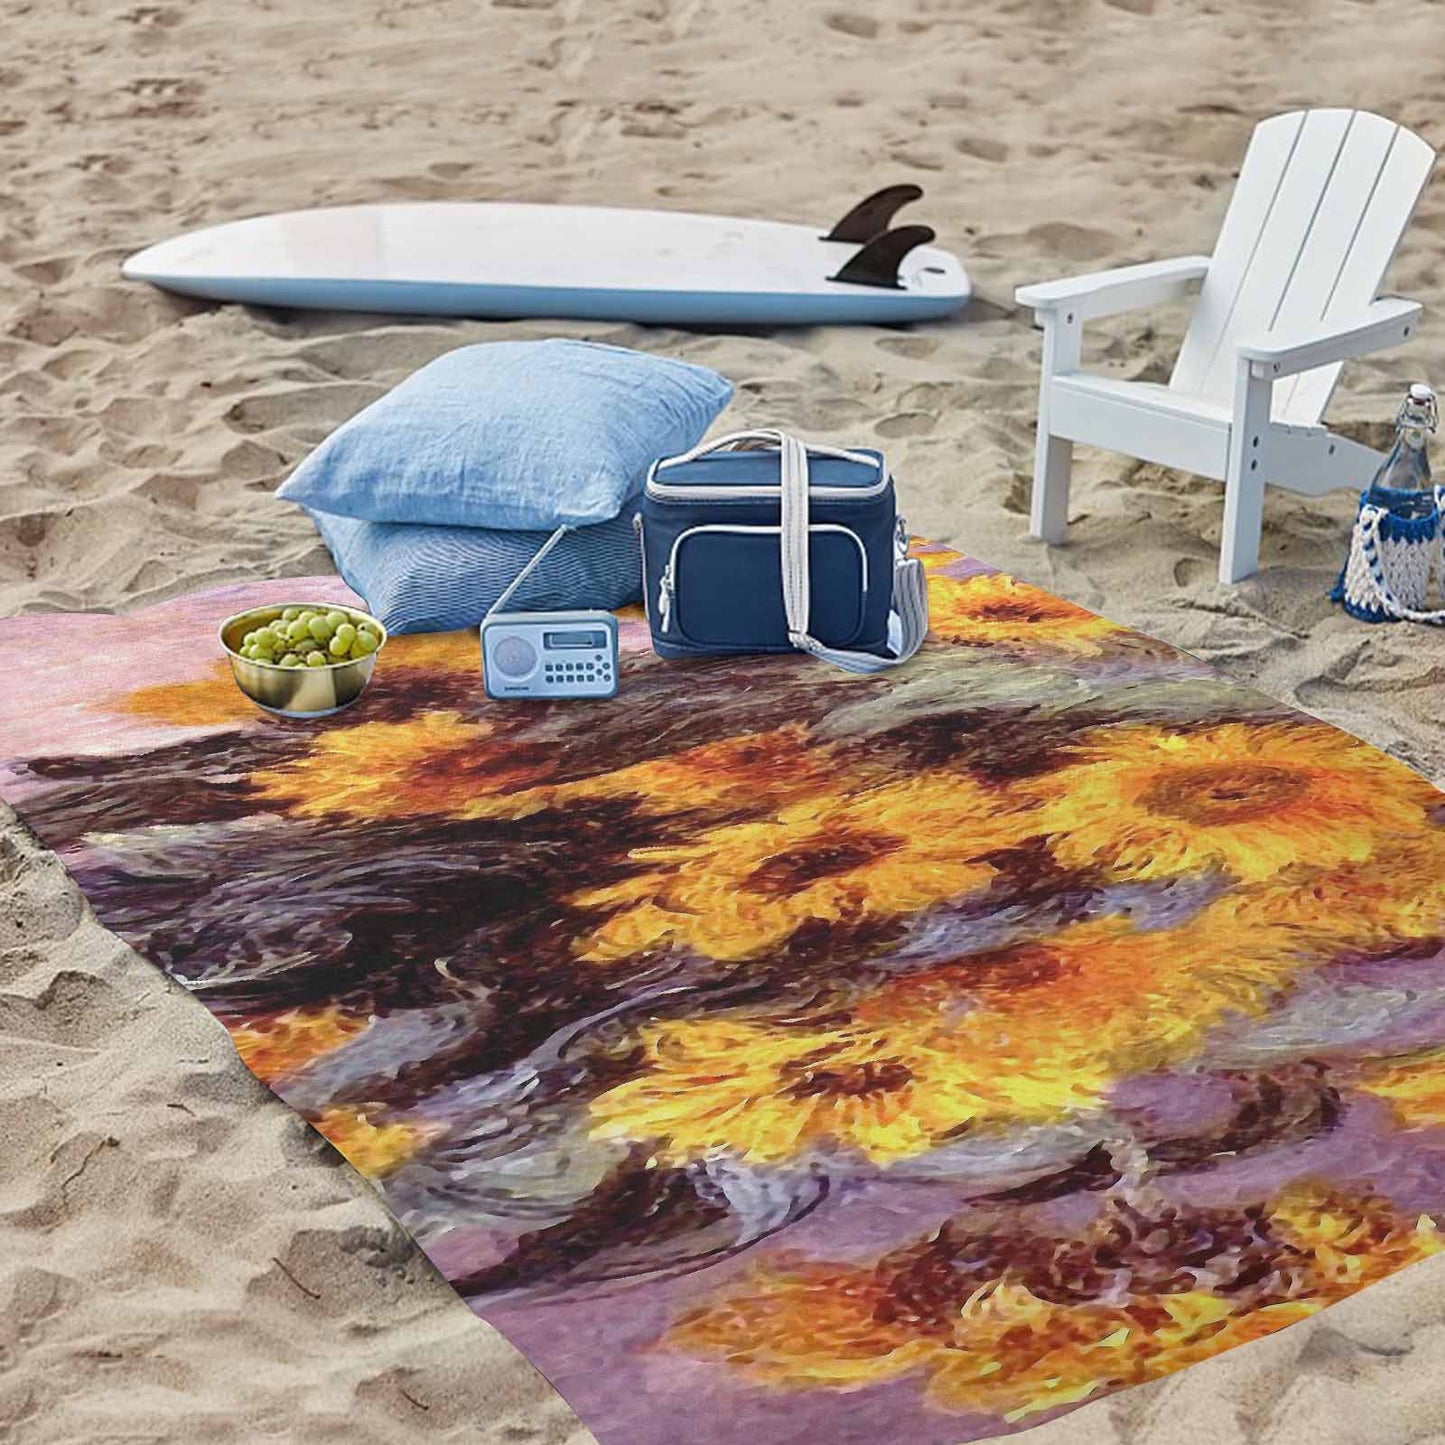 Vintage Floral waterproof picnic mat, 81 x 55in, Design 49